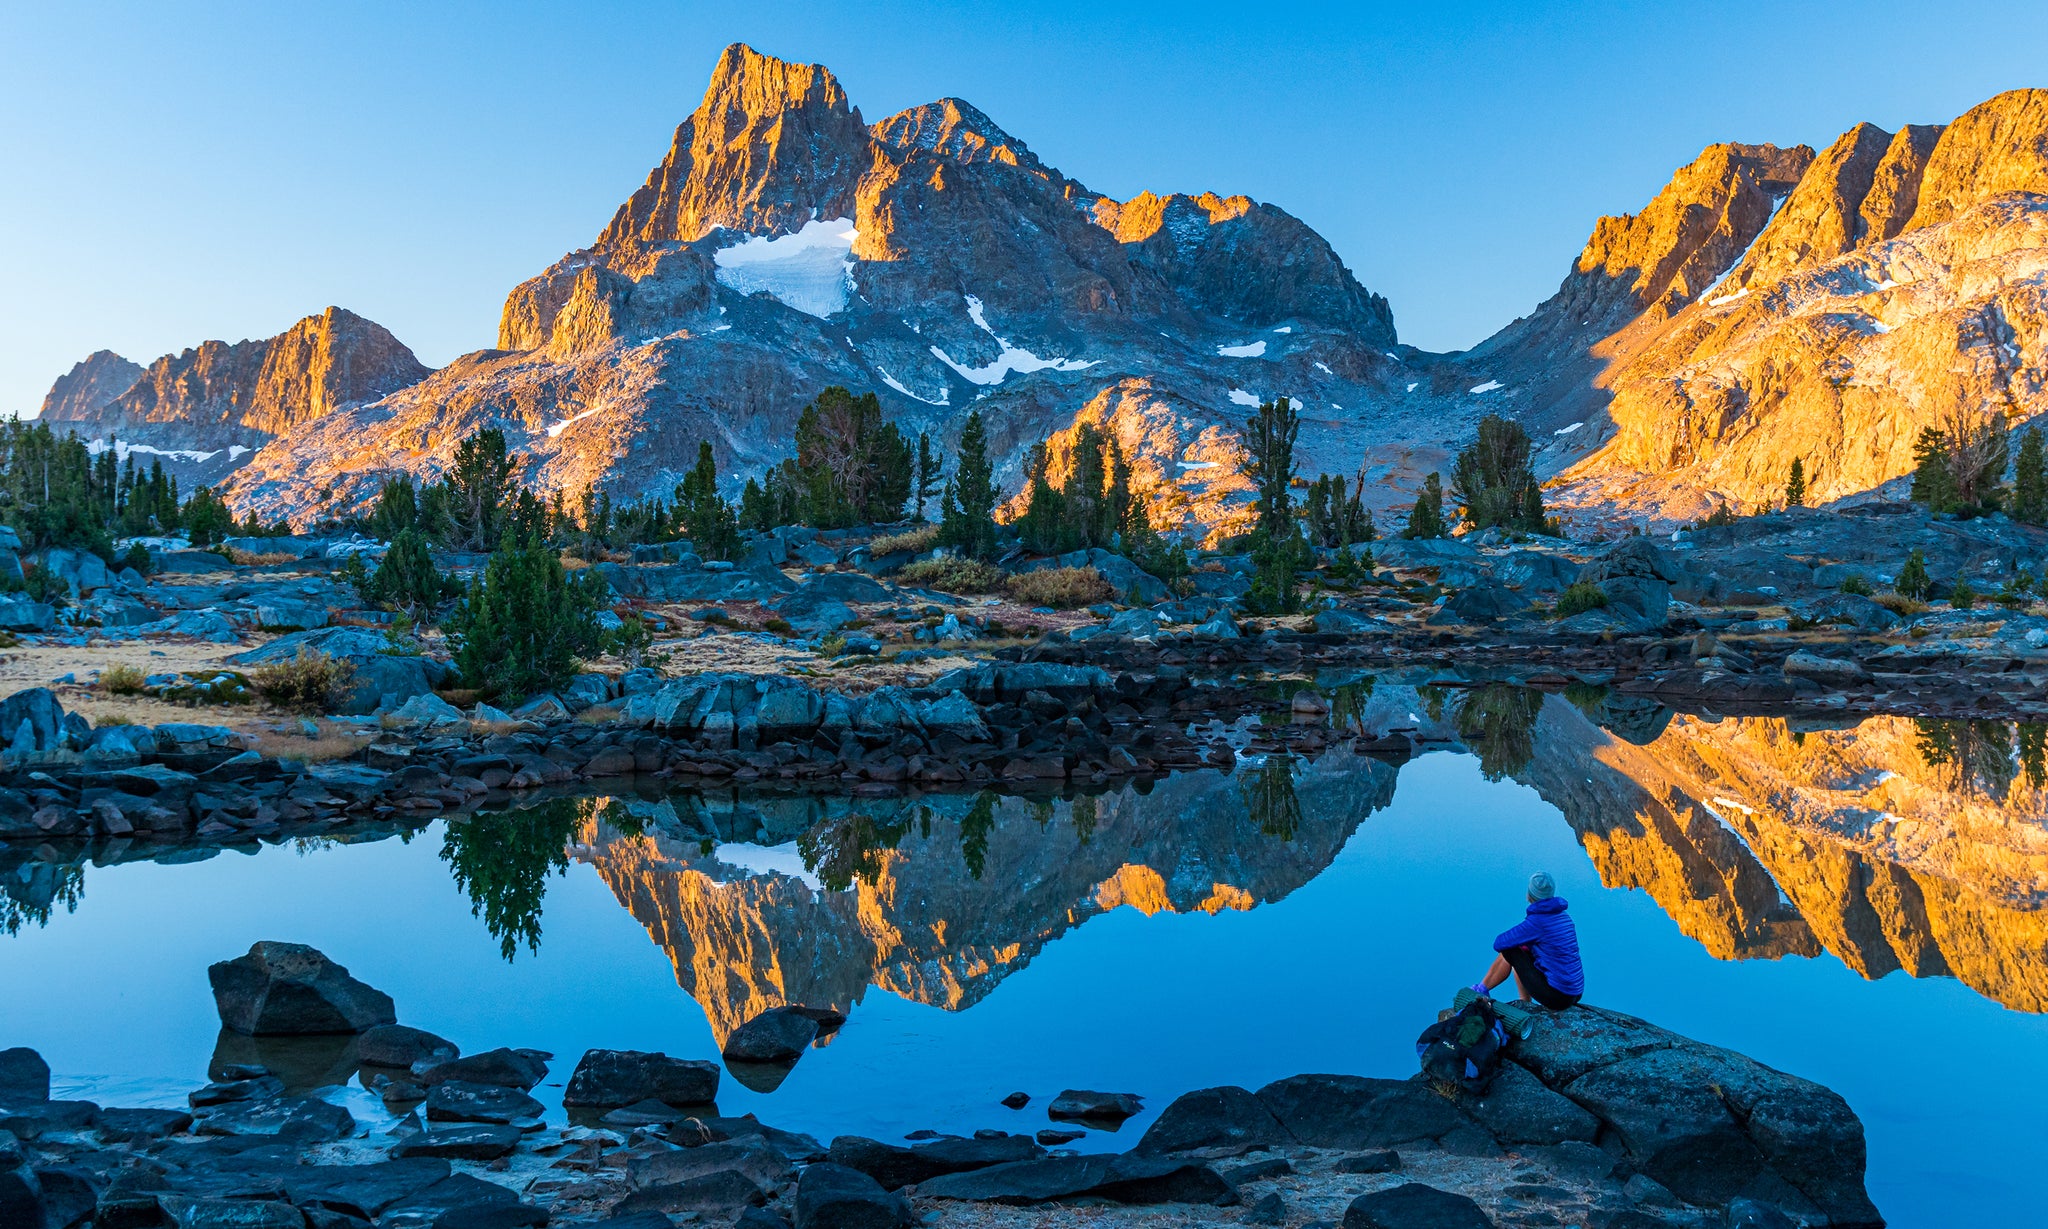 Monolithic mountain reflects off Alpine lake